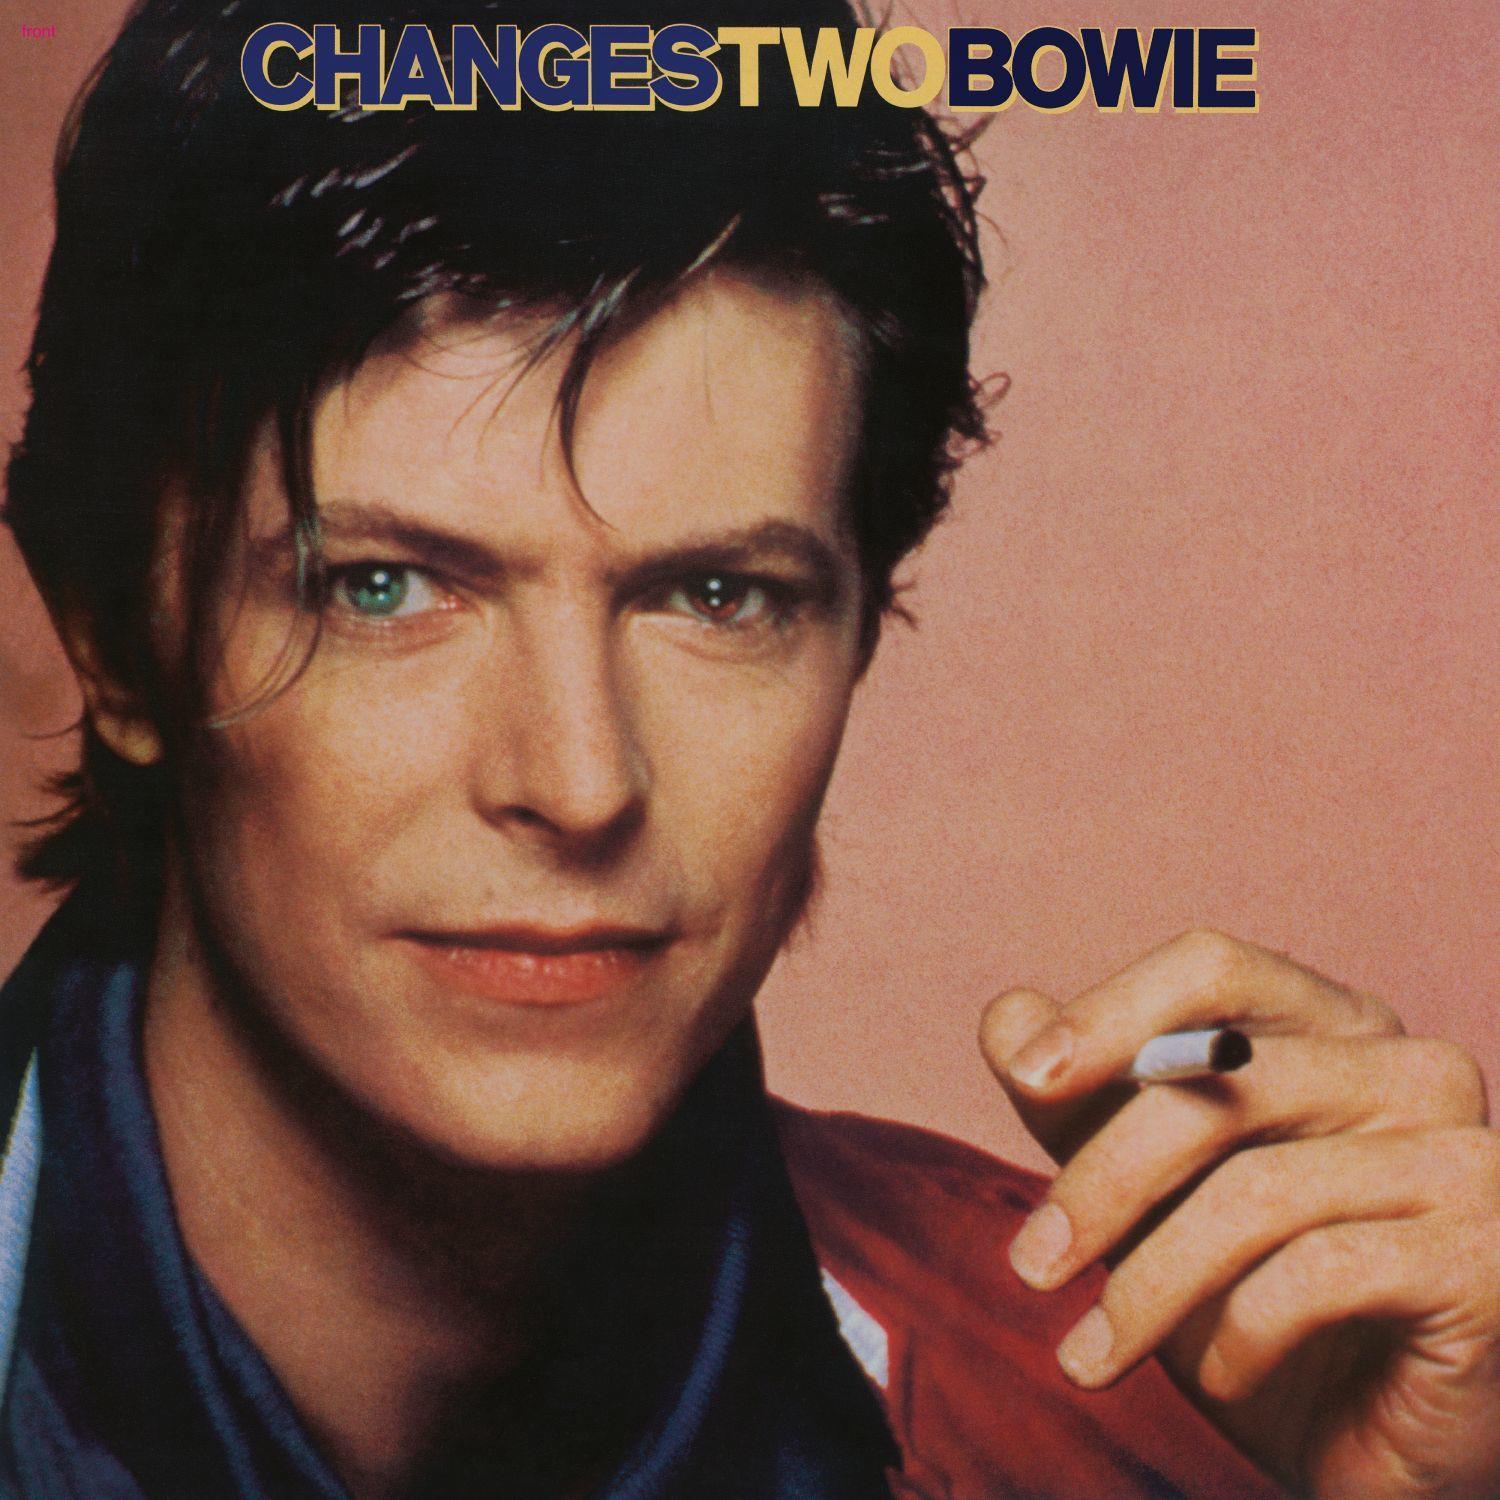 Changestwobowie by David Bowie (CD)